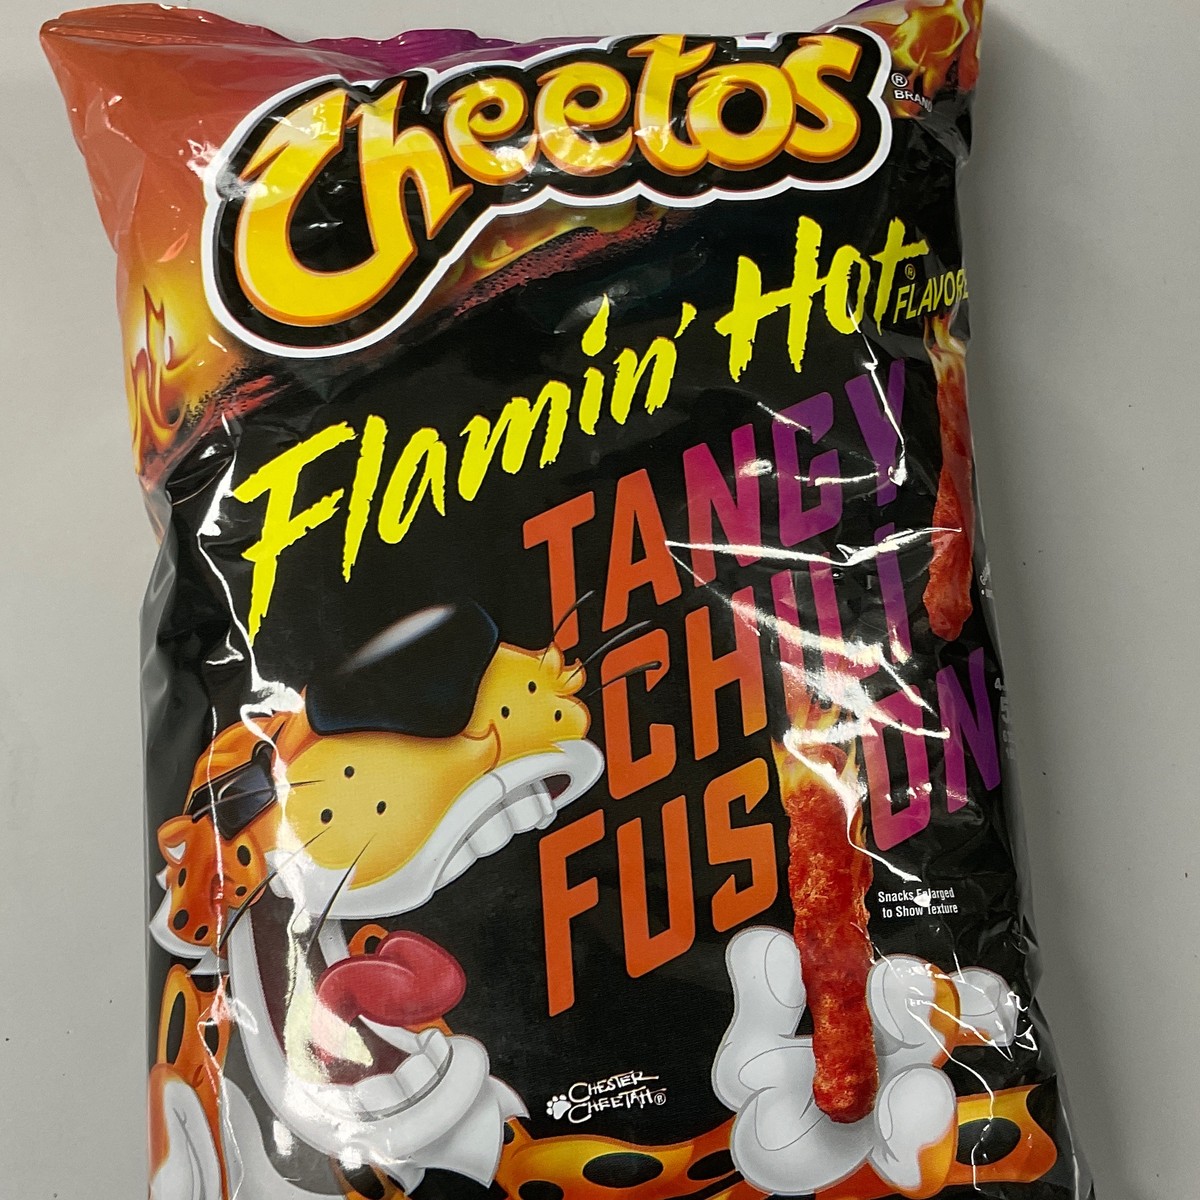 Cheetos Cheddar Cheese & Jalapeno, Mini Mart